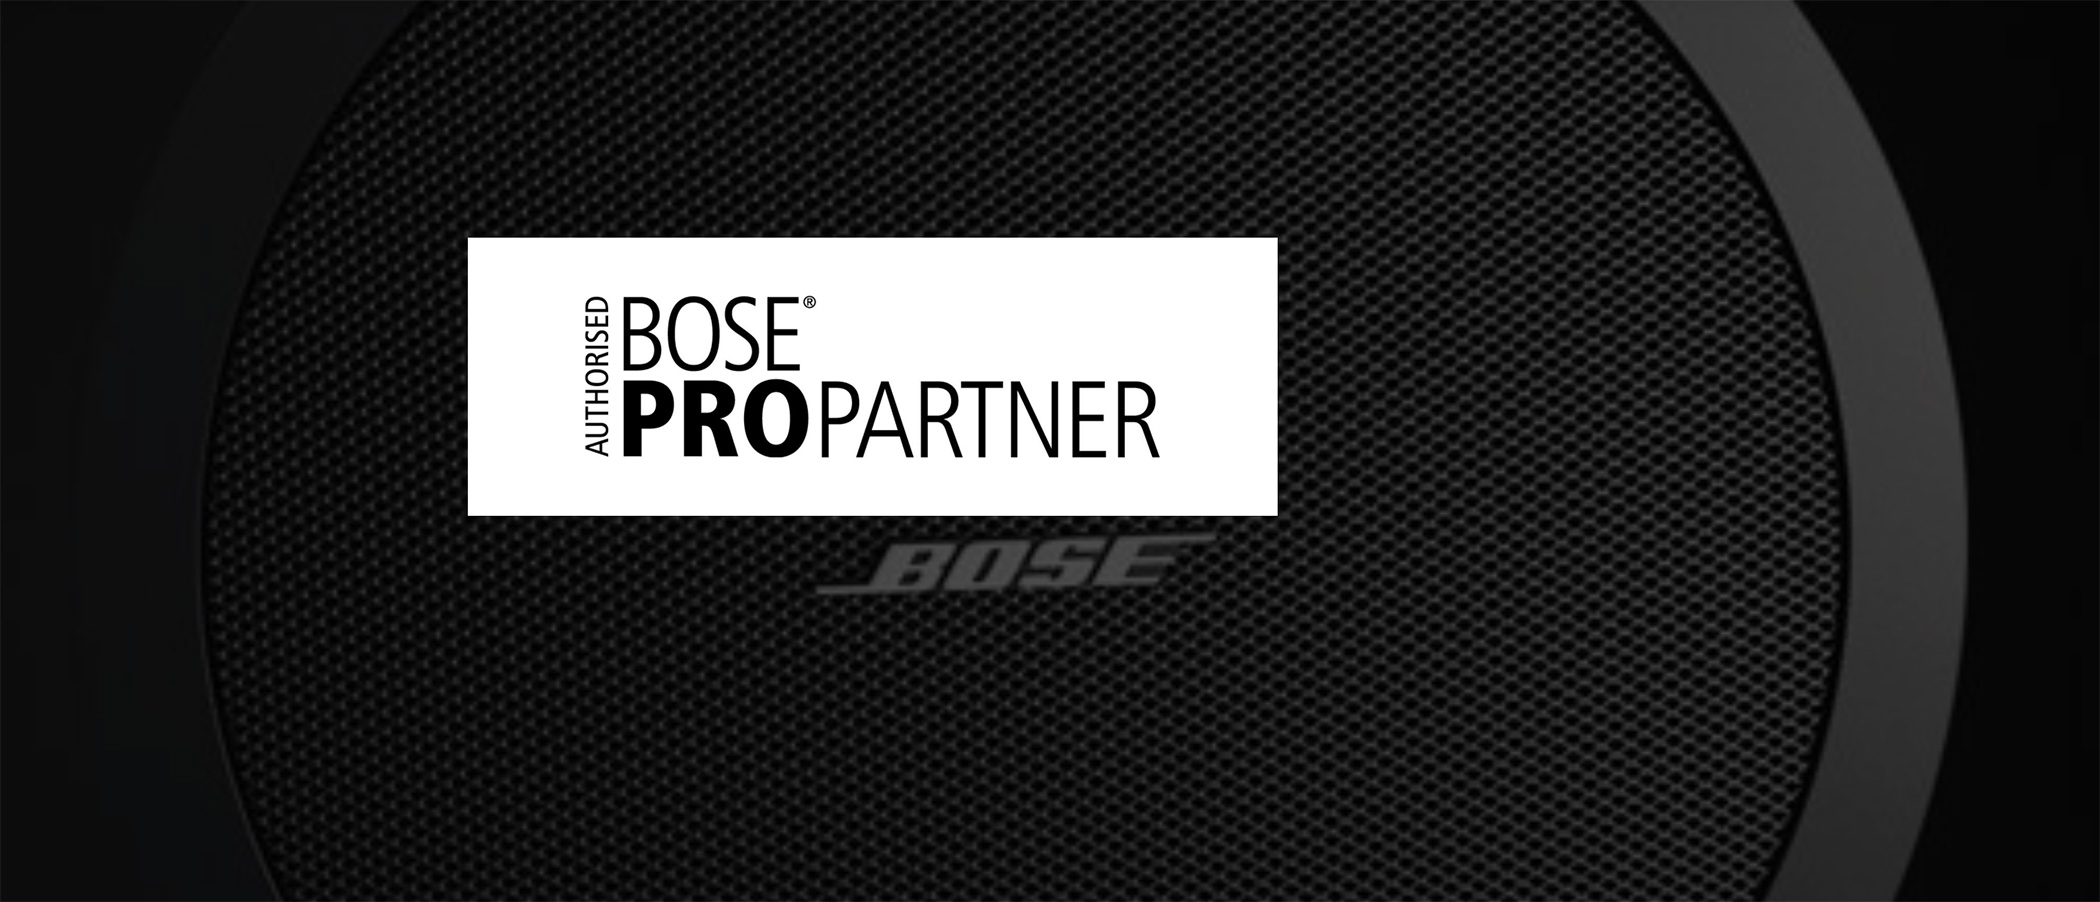 bose-pro-partner-long.jpg